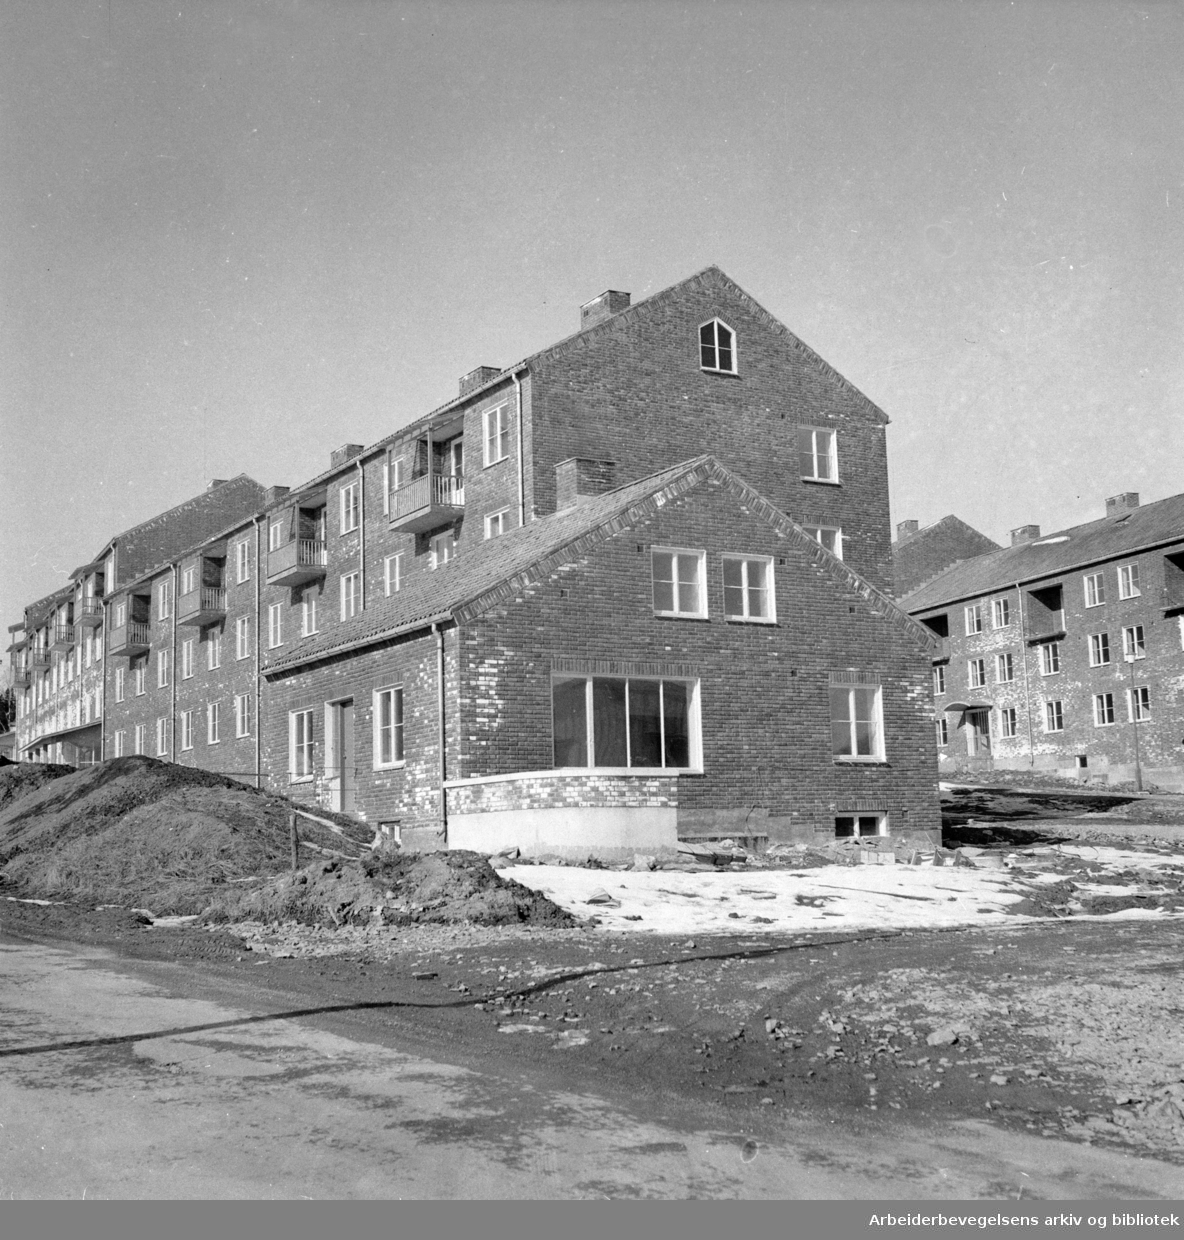 Sogn, Studentbyen under bygging. April 1952